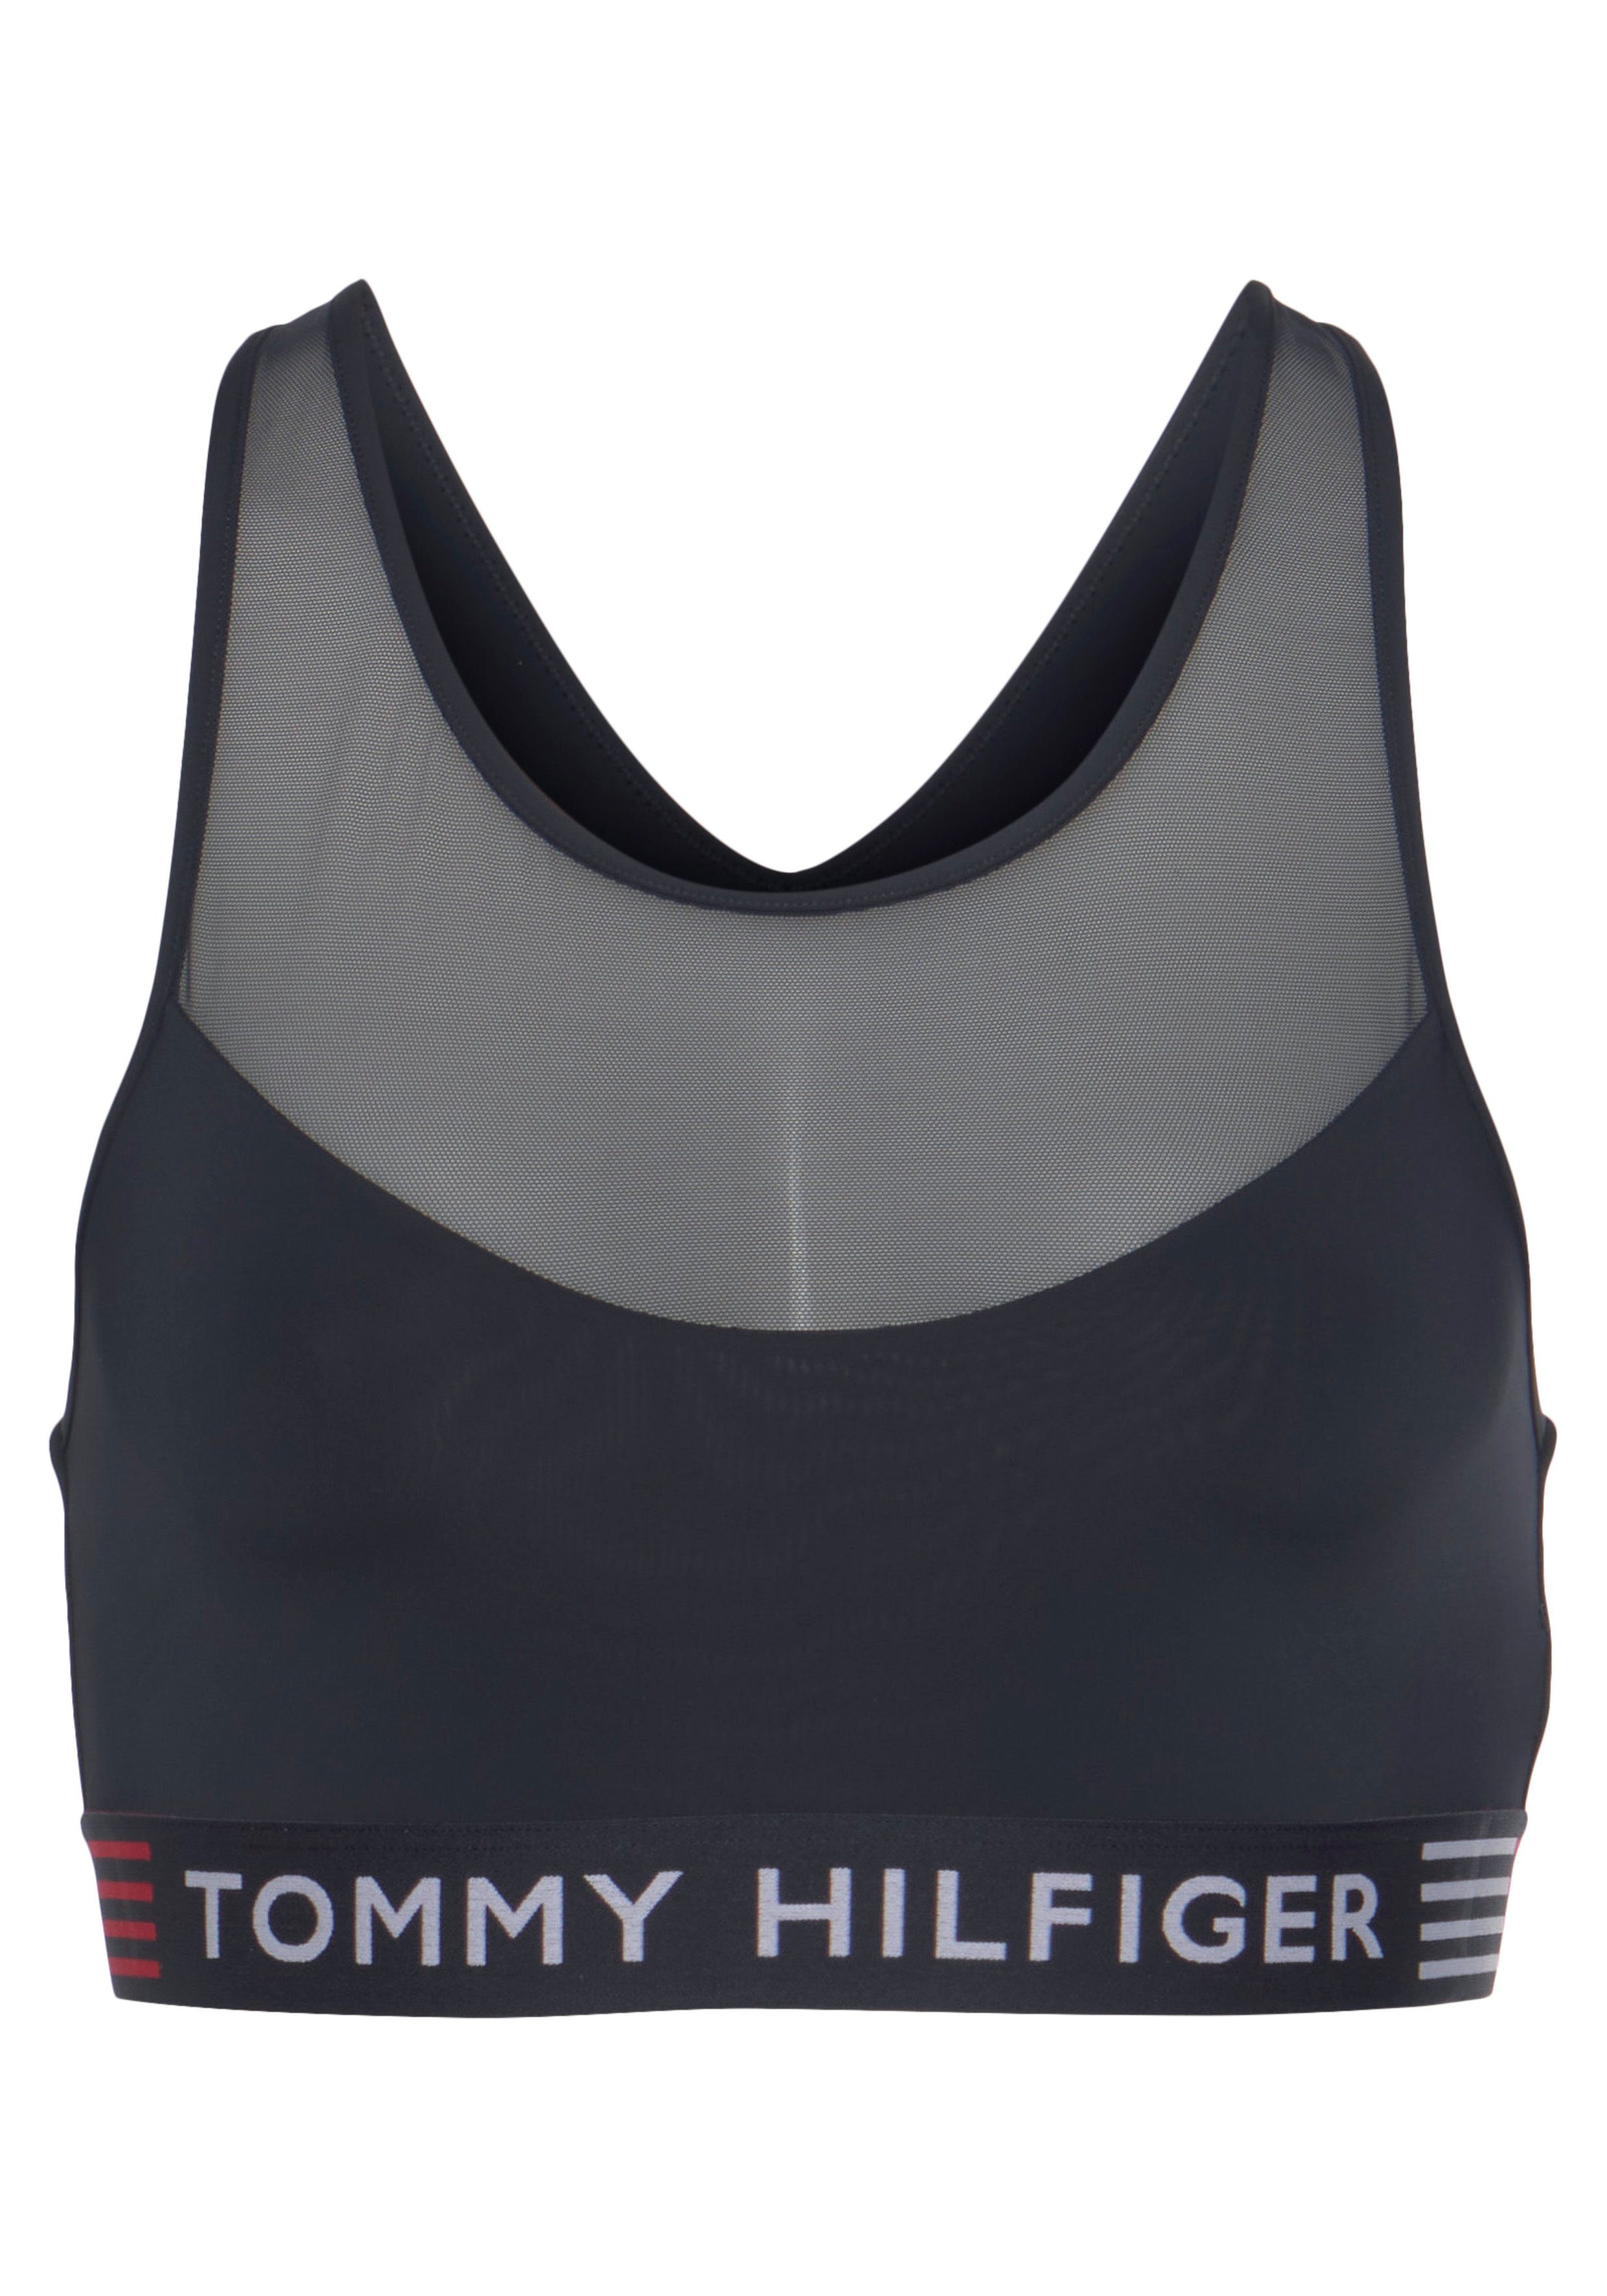 Tommy Hilfiger Underwear Bralette UNLINED BRALETTE